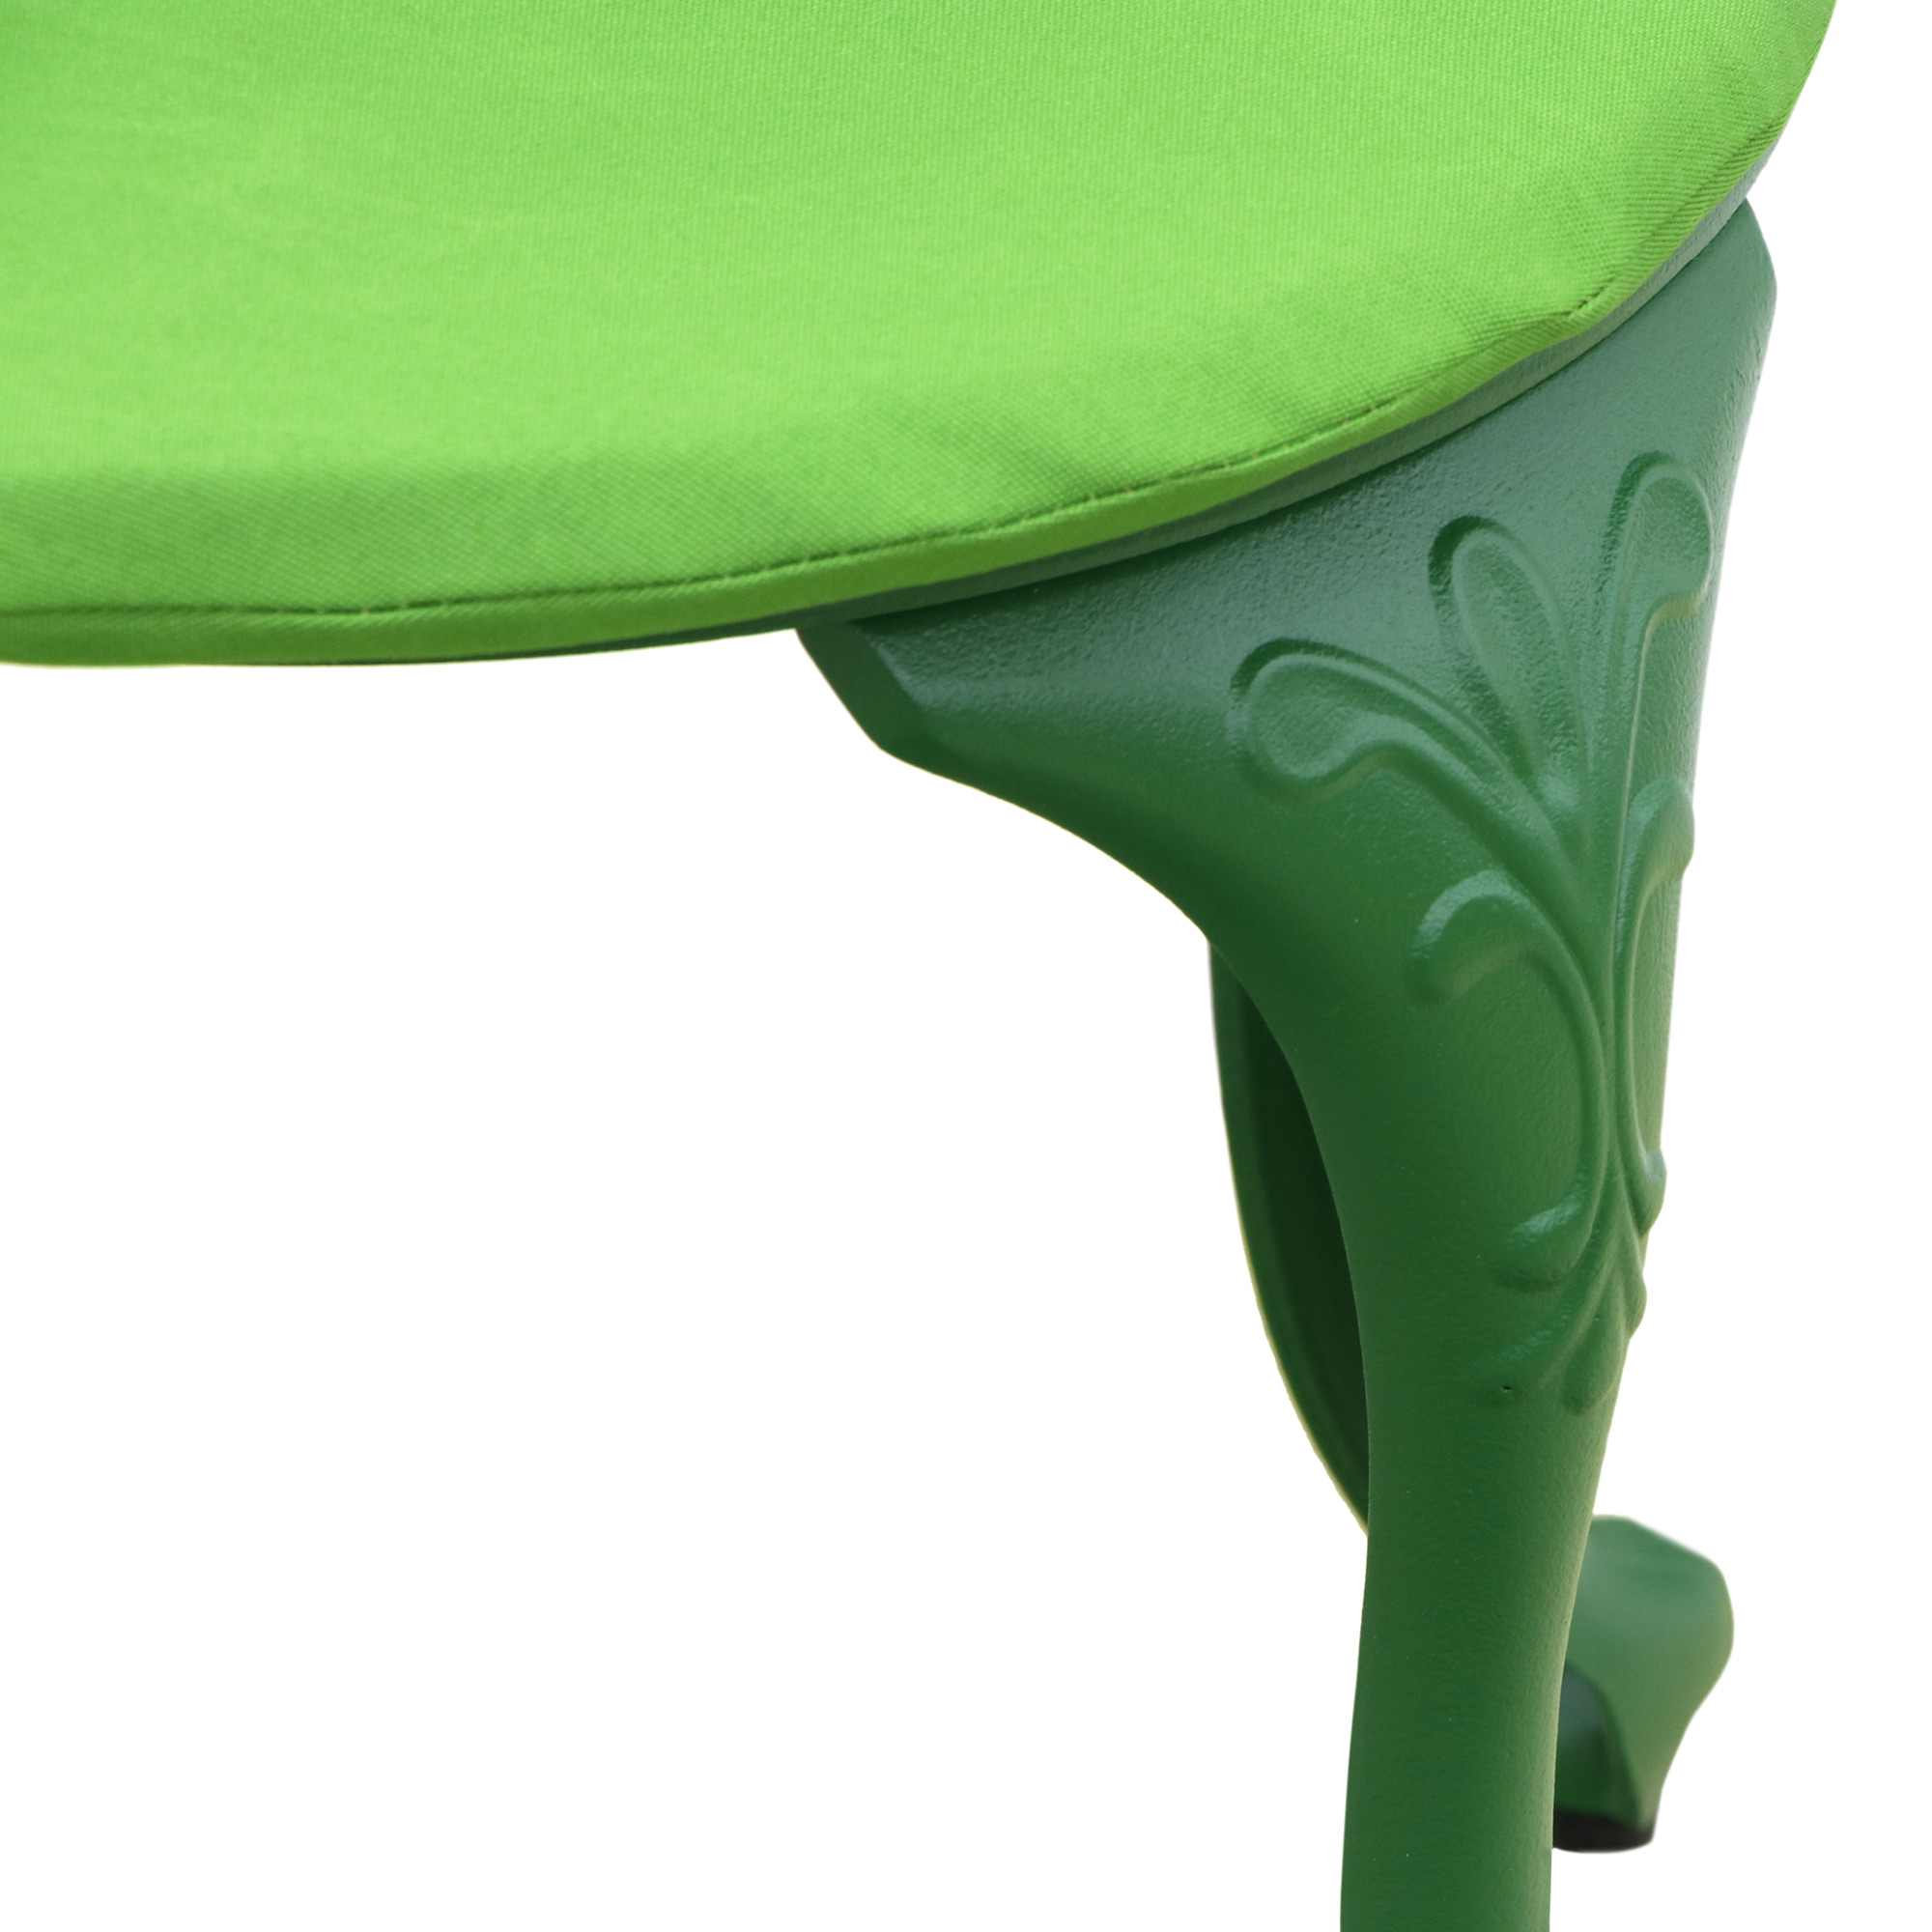 Комплект мебели Linyi 3 предмета, цвет зеленый, размер 60,5х60,5х66 см - фото 7